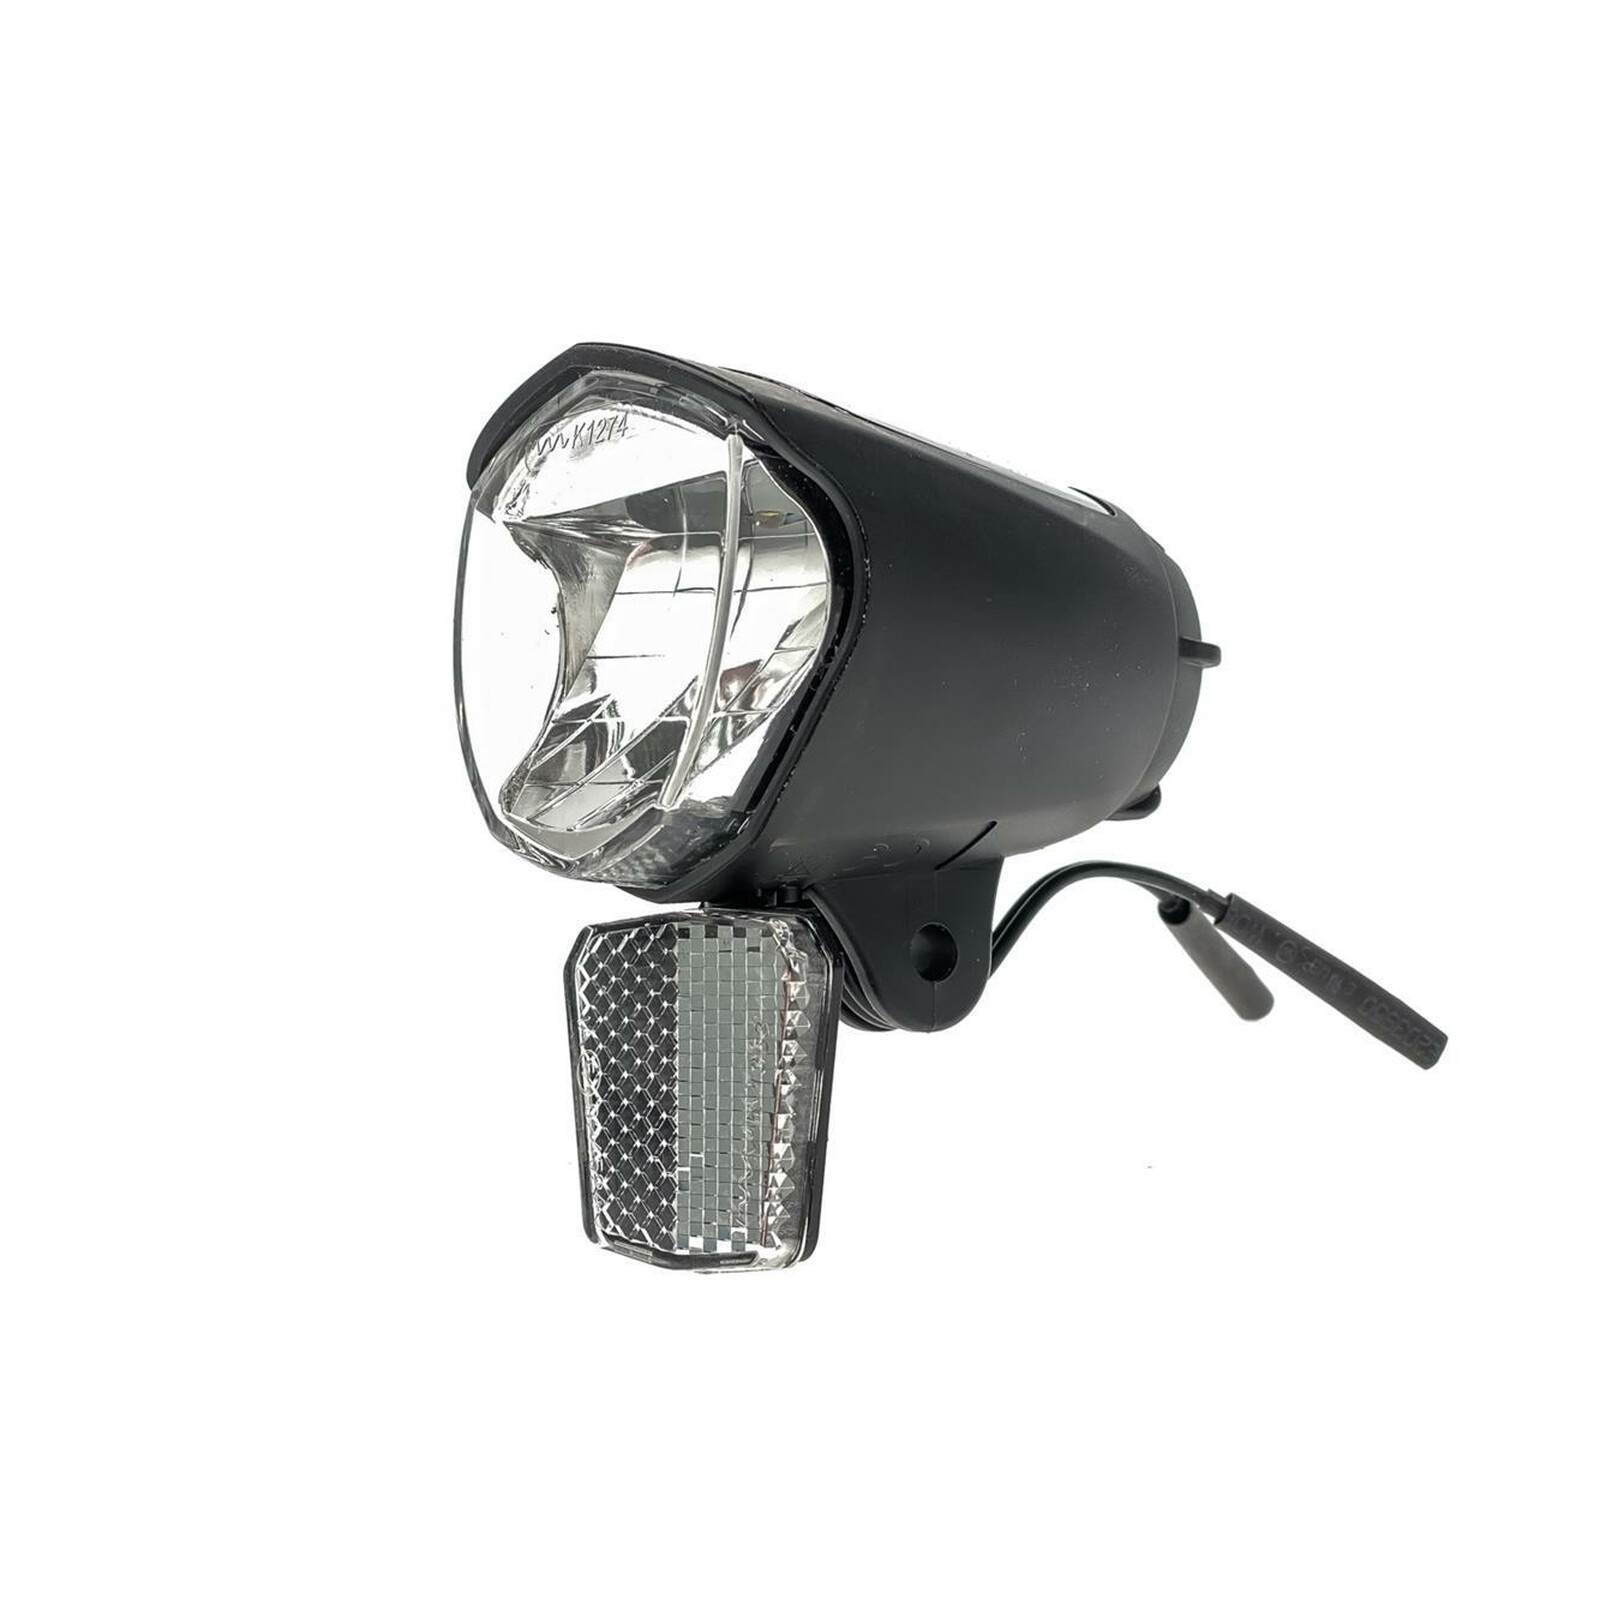 70 LUX LED Fahrrad Scheinwerfer Dynamo Ebike 6V ON OFF Schalter Reflektor K1274 